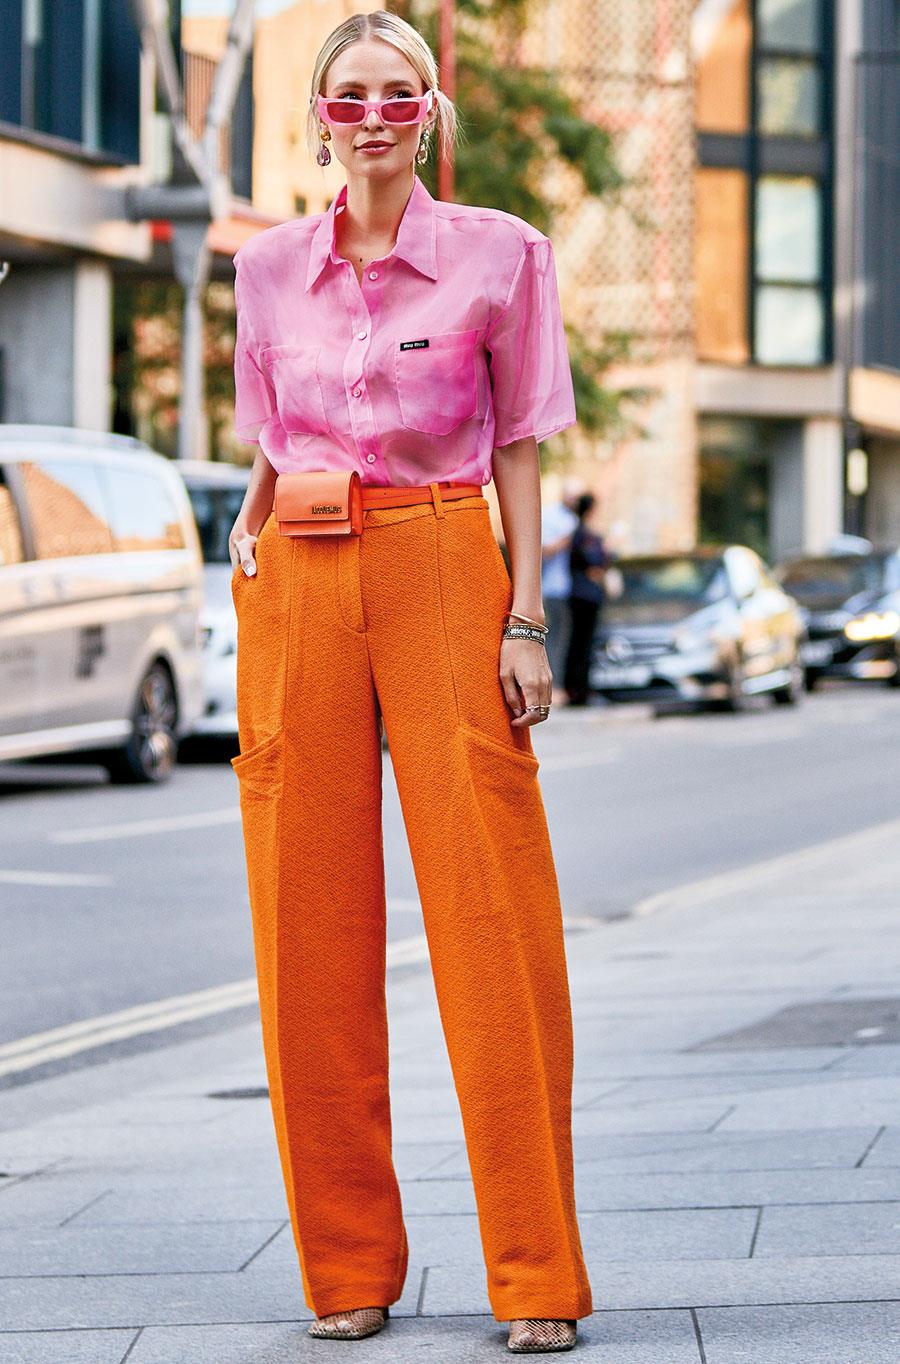 Pantalones naranja, rosa o amarillo con un top verde